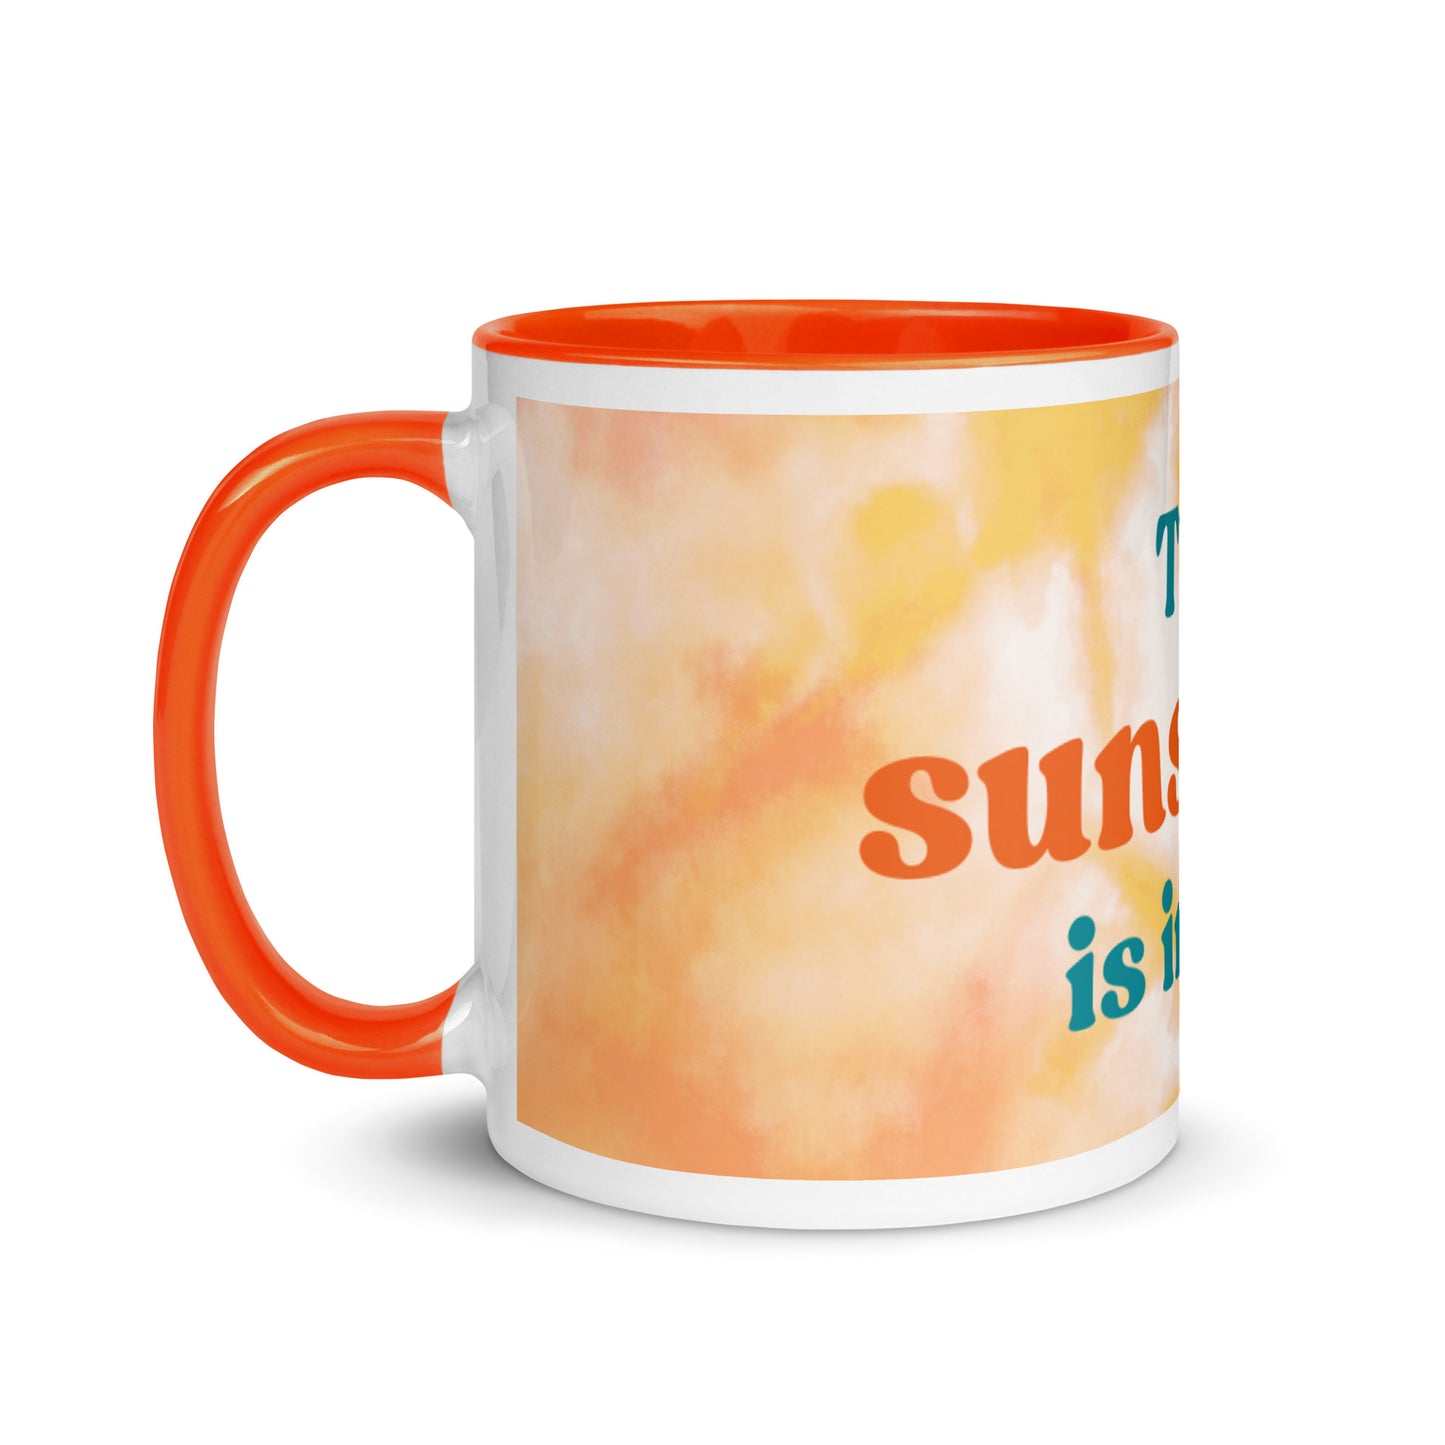 Orange Tie Dye Color Mug - The Sunshine is in me